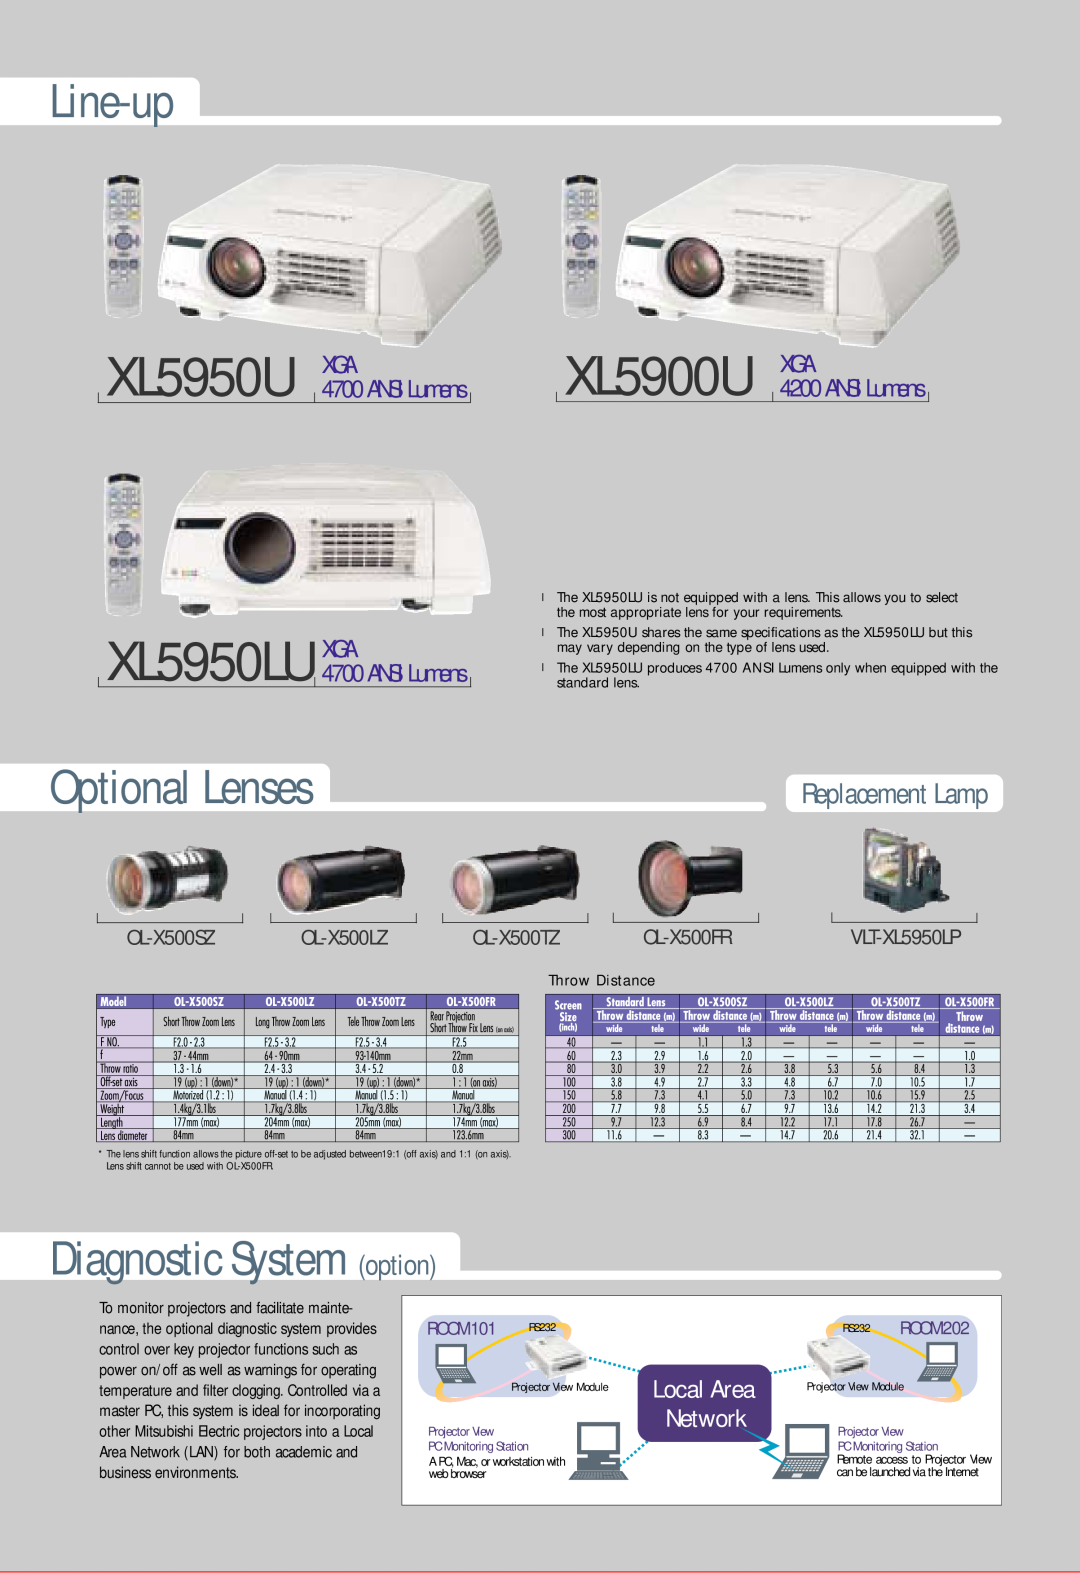 Mitsubishi Electronics XL5950U manual Local Area Network, XL5950LU XGA, XL5900U, Line-up, Optional Lenses, Replacement Lamp 